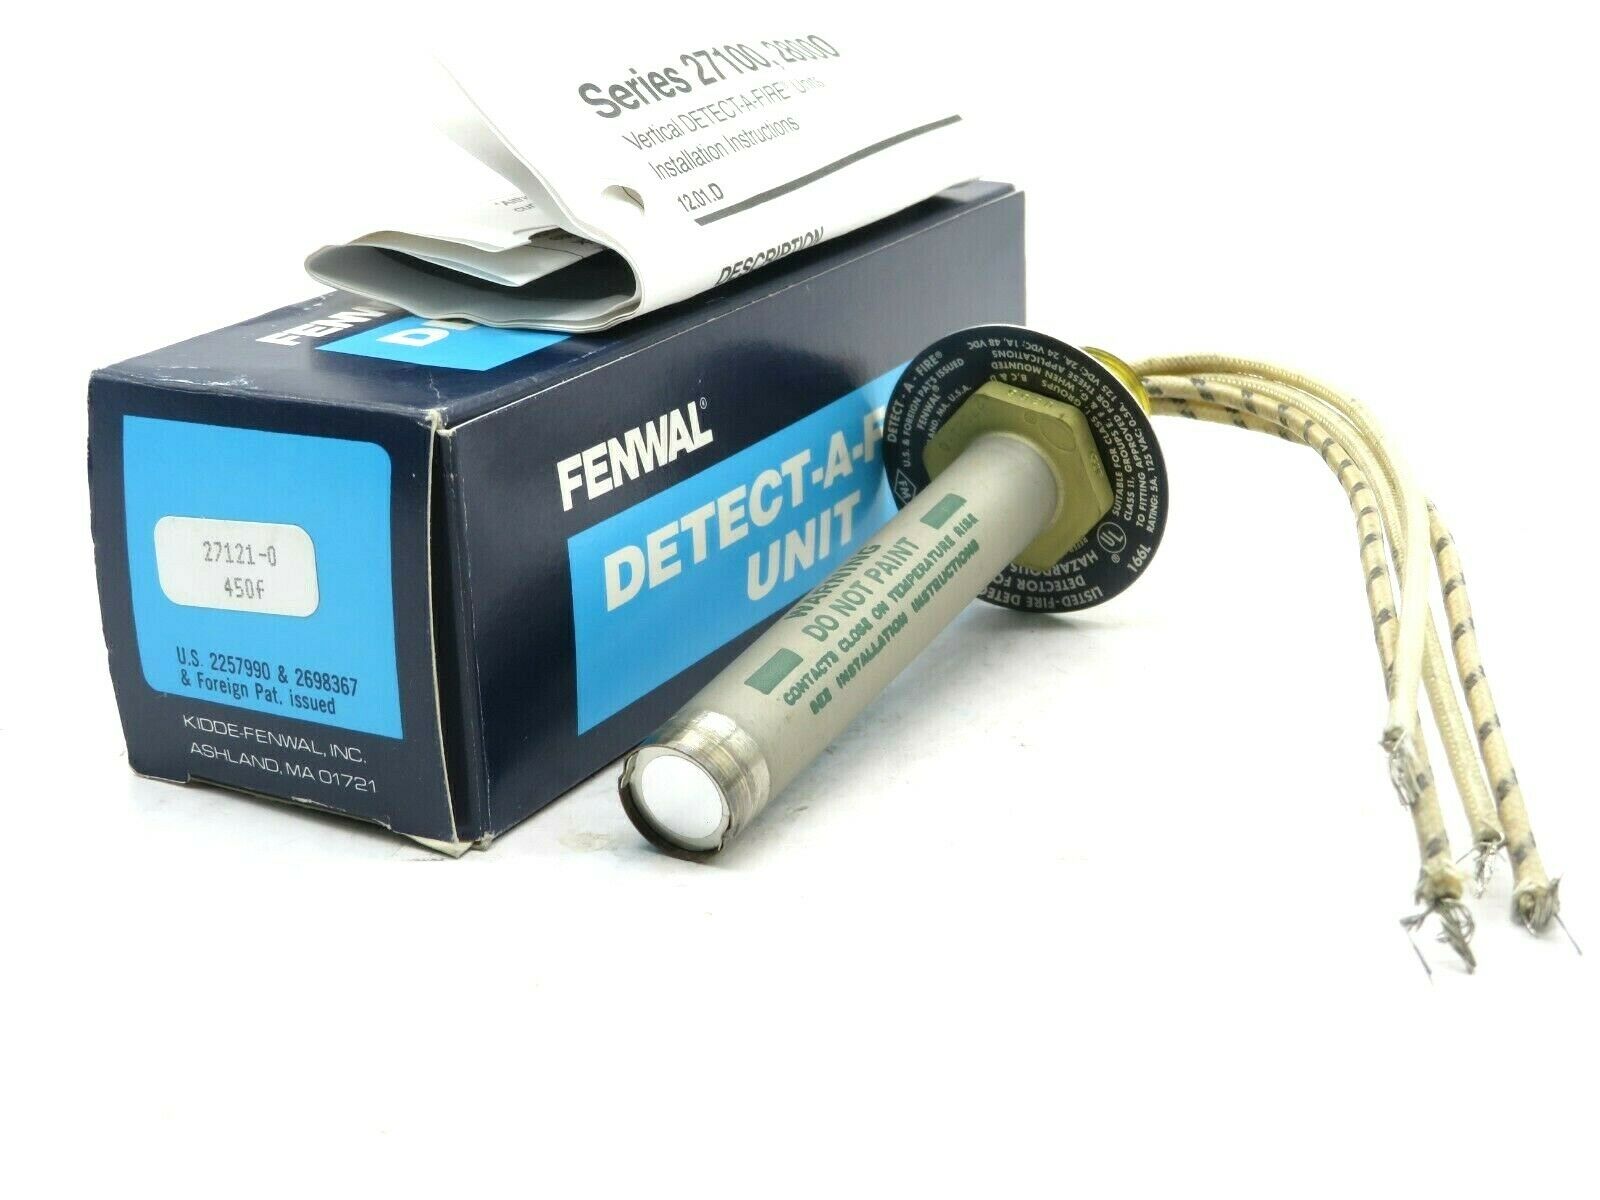 Fenwal Detect-A-Fire 27121-0 450 f new 